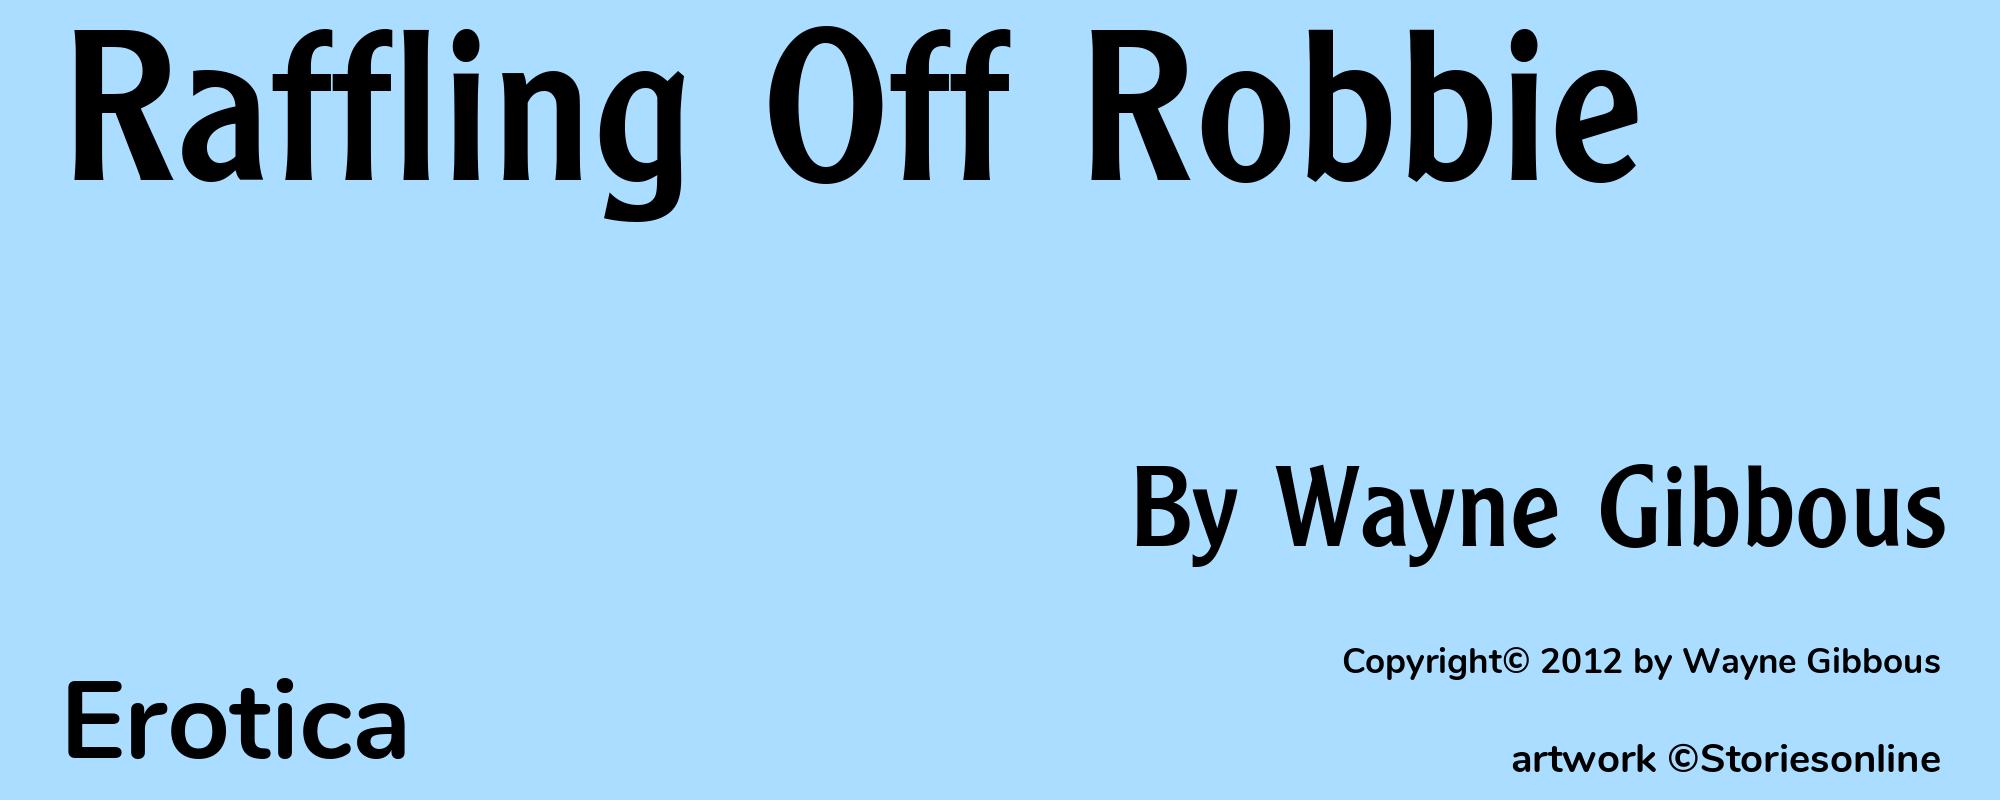 Raffling Off Robbie - Cover